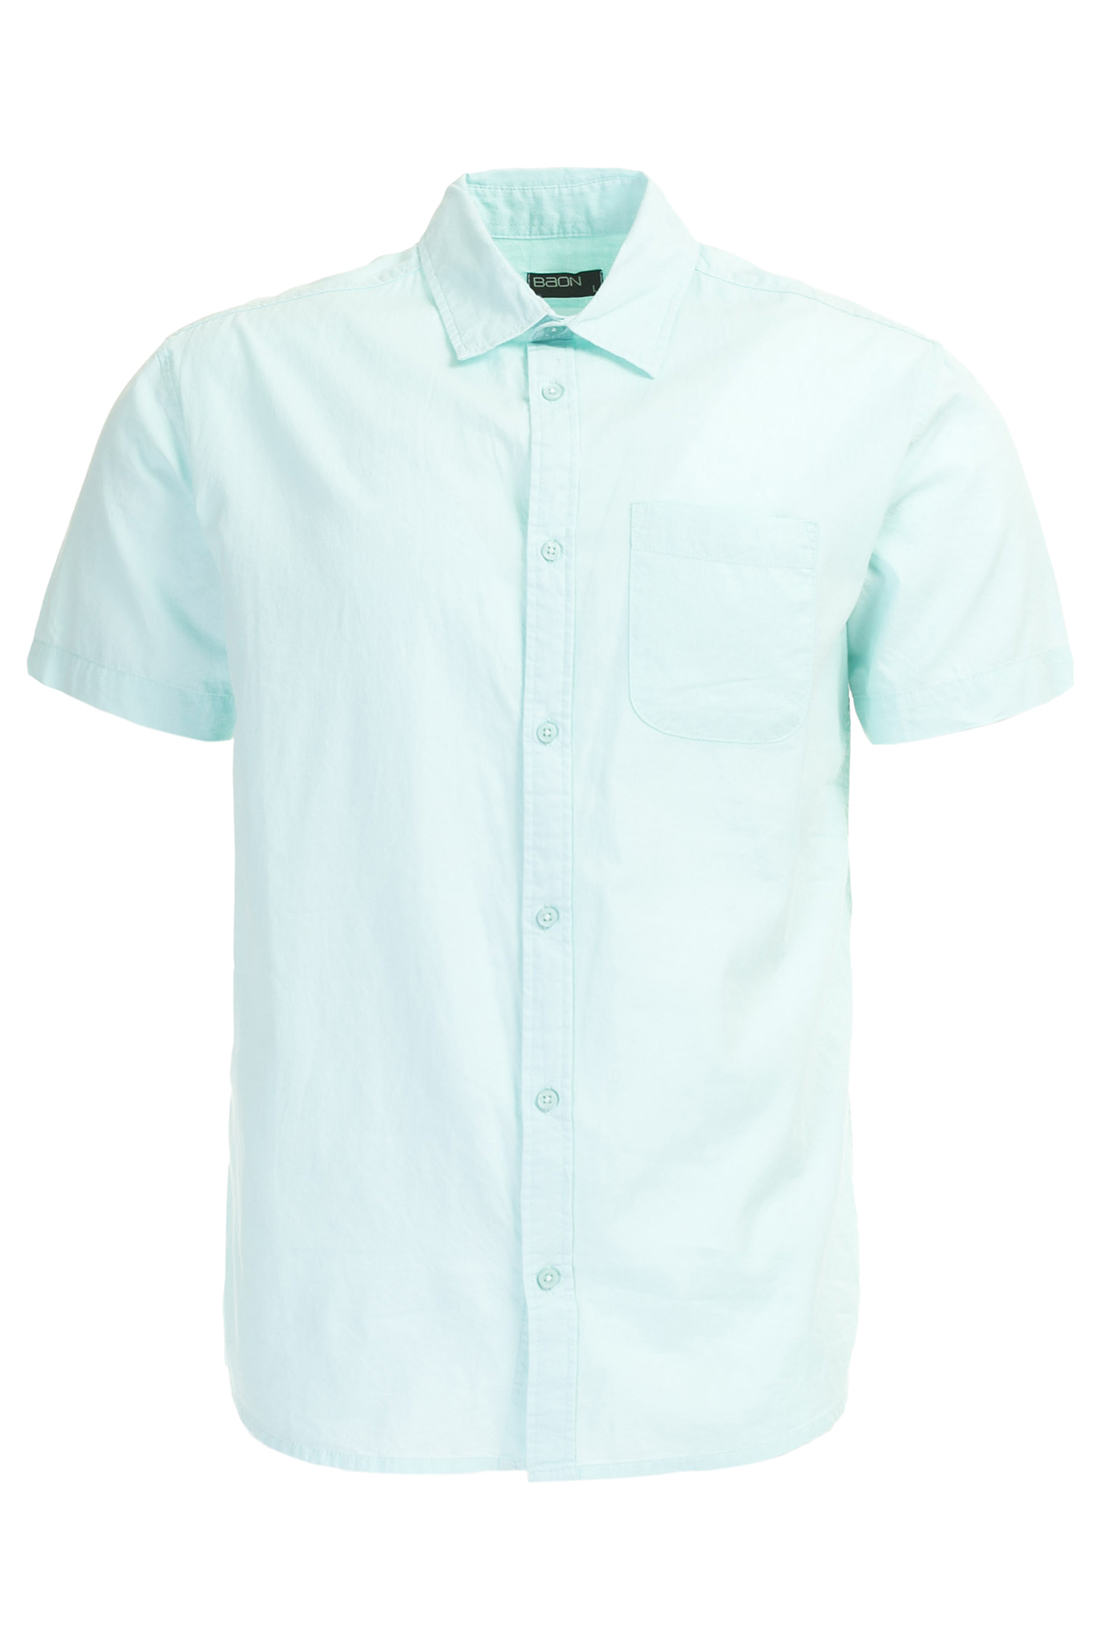 Базовая рубашка с коротким рукавом (арт. baon B687025), размер M, цвет голубой Базовая рубашка с коротким рукавом (арт. baon B687025) - фото 4